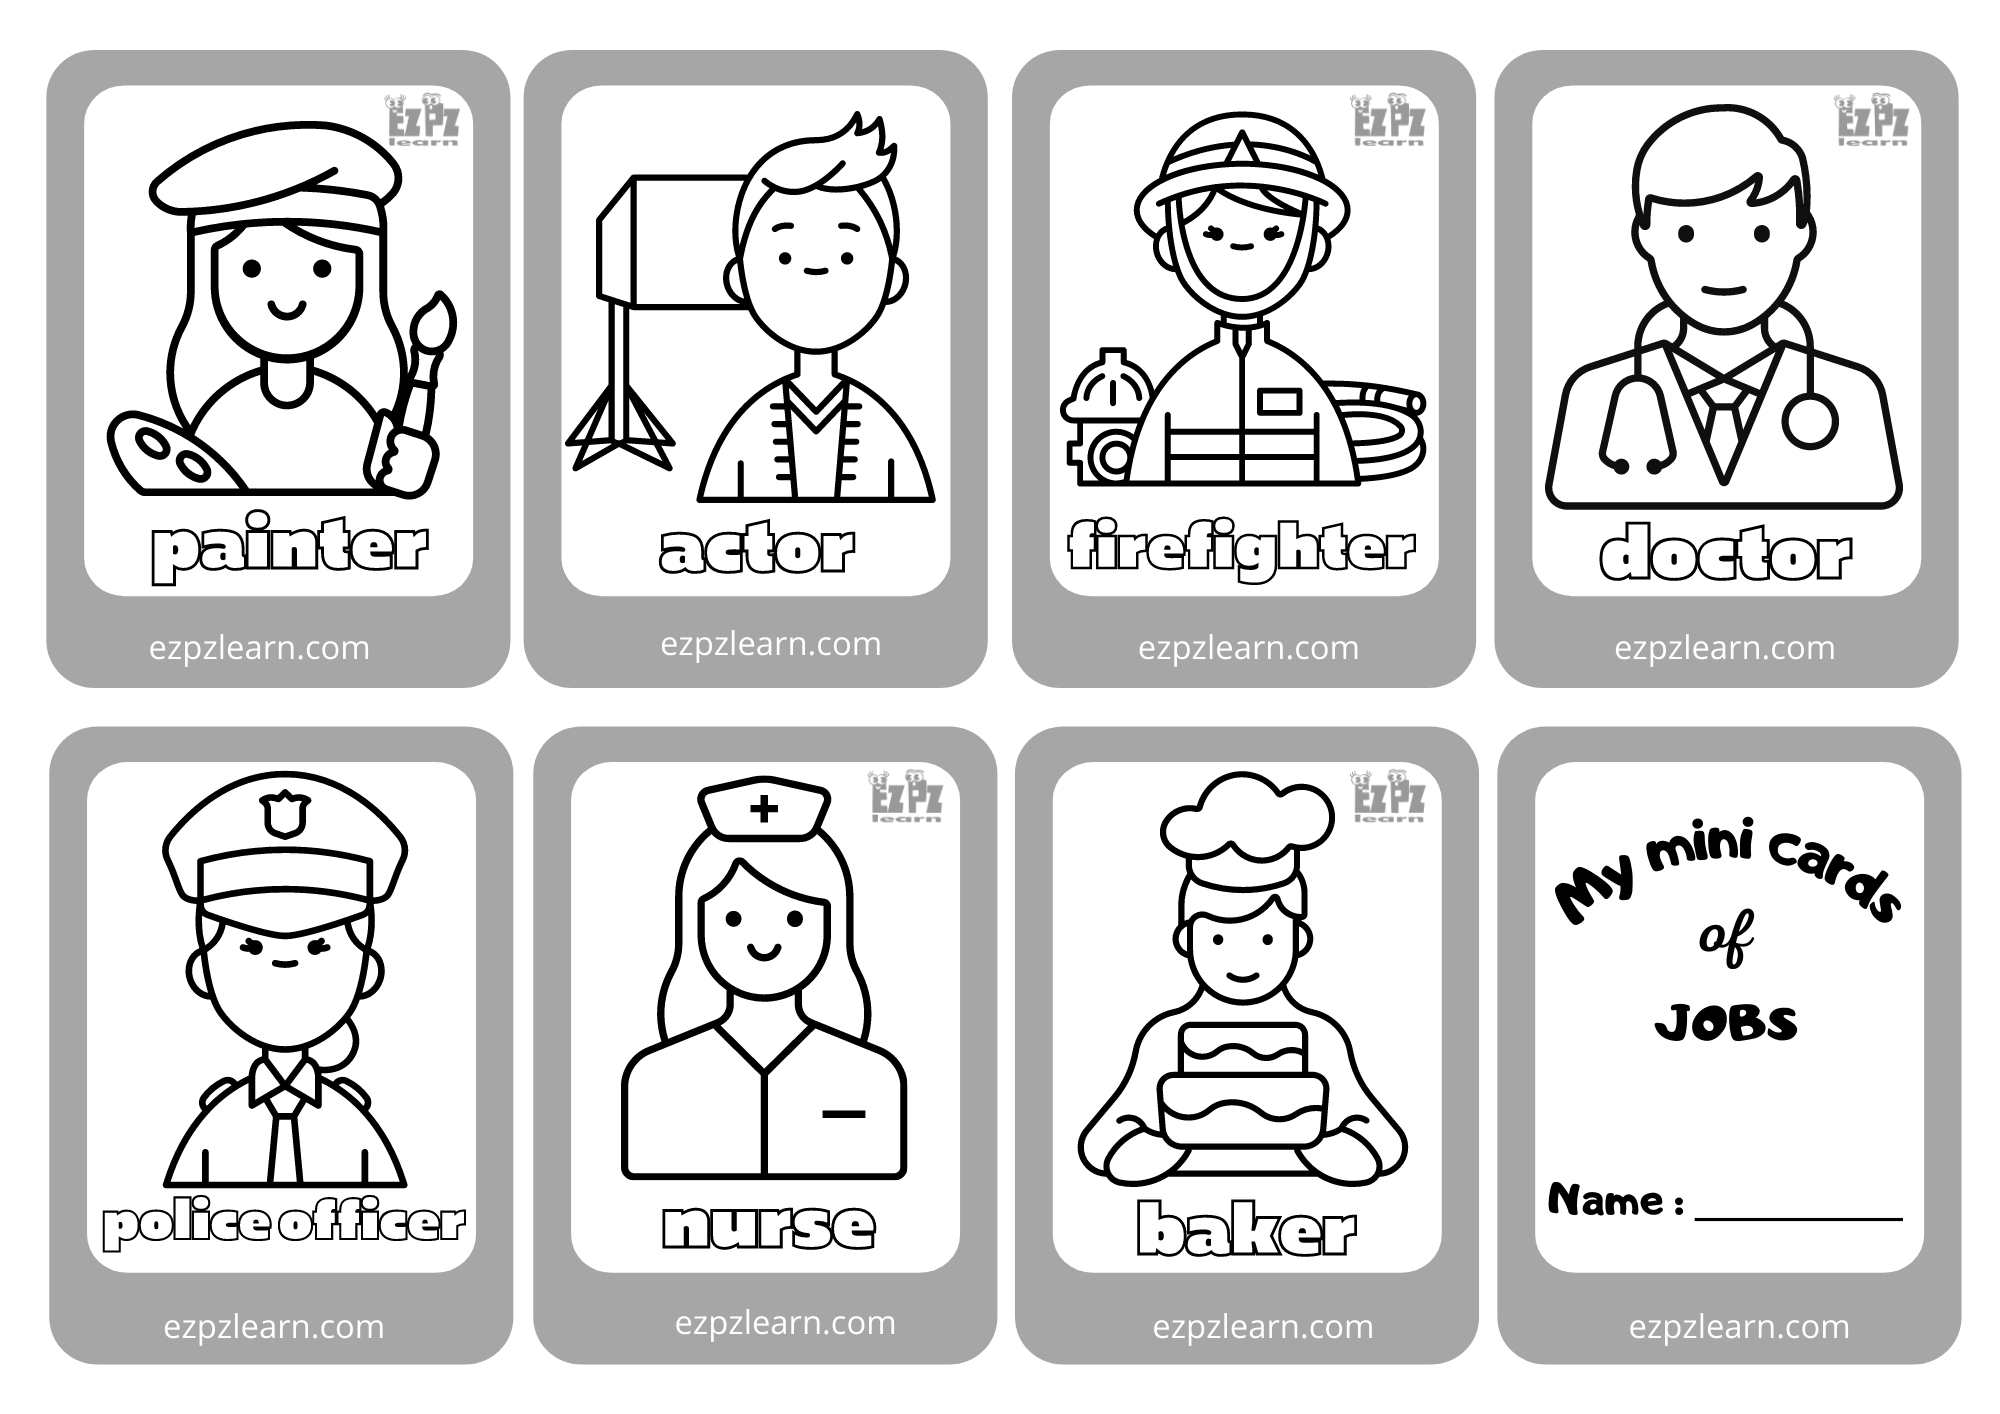 jobs-mini-coloring-cards-free-pdf-download-ezpzlearn